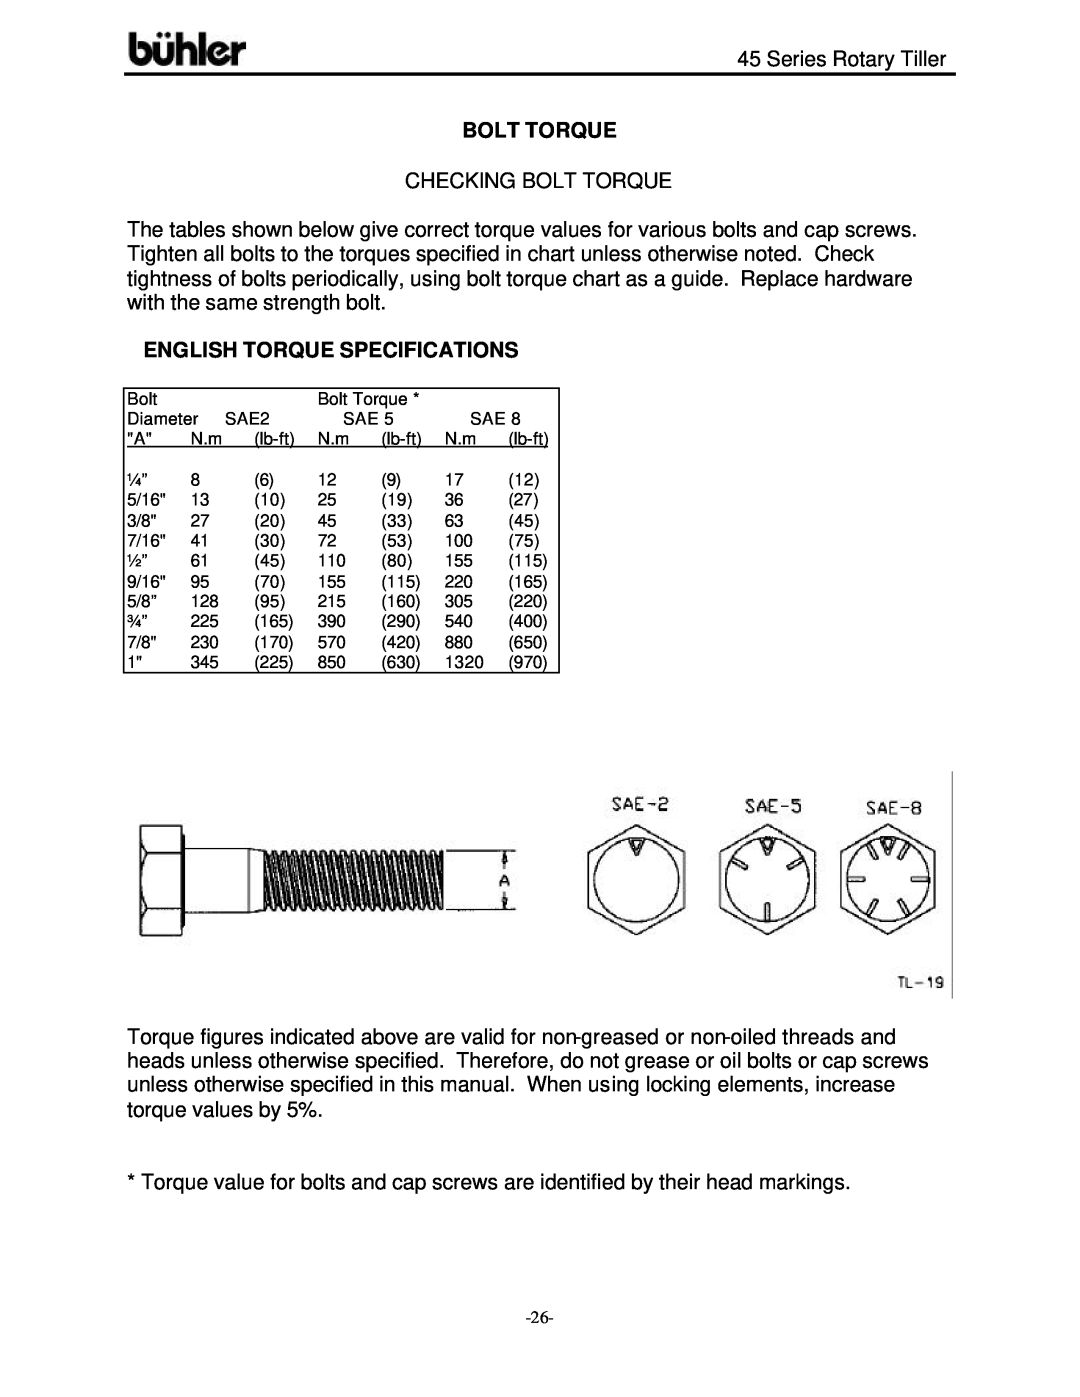 Buhler 45 Series warranty Bolt Torque, English Torque Specifications 